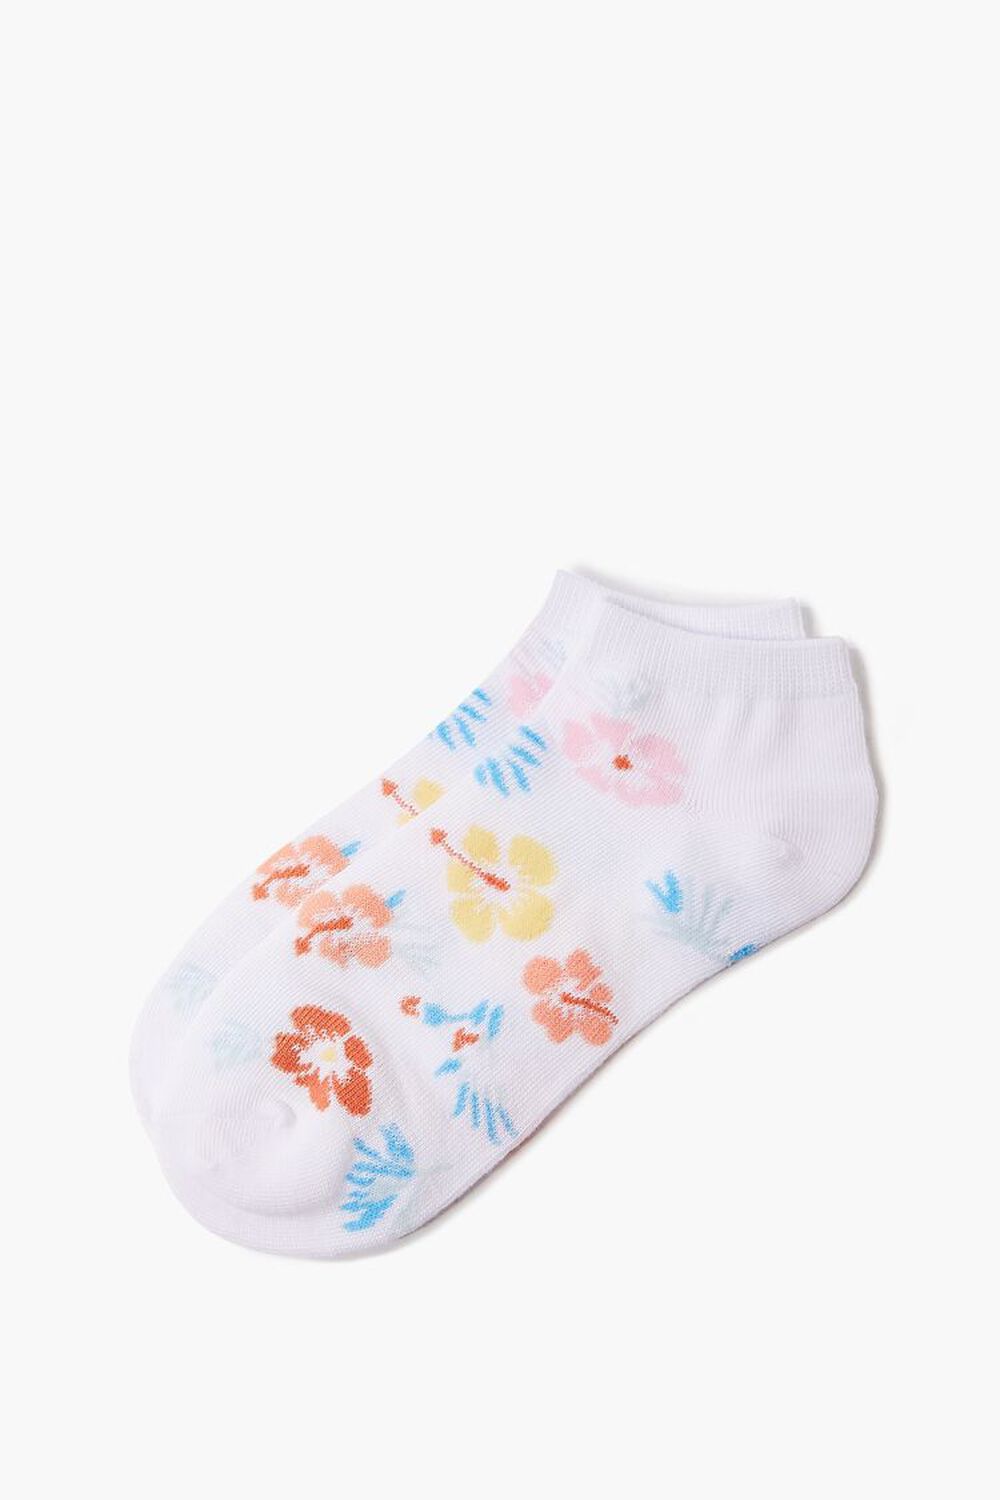 Tropical Floral Print Ankle Socks, image 2